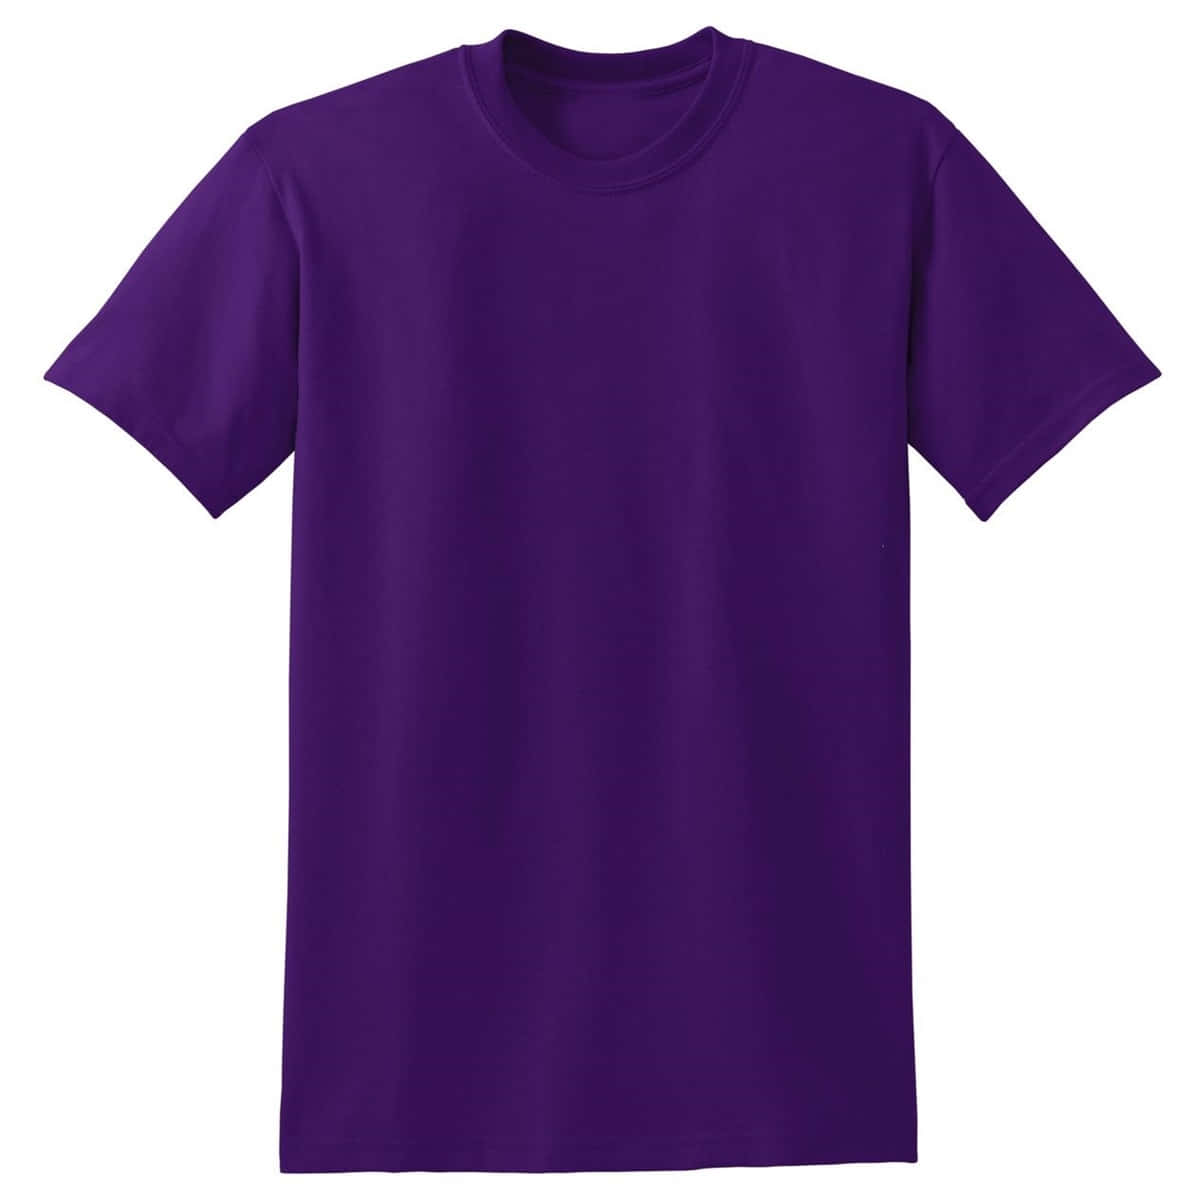 Make bold fashion decisions with this Purple Shirt!" Wallpaper